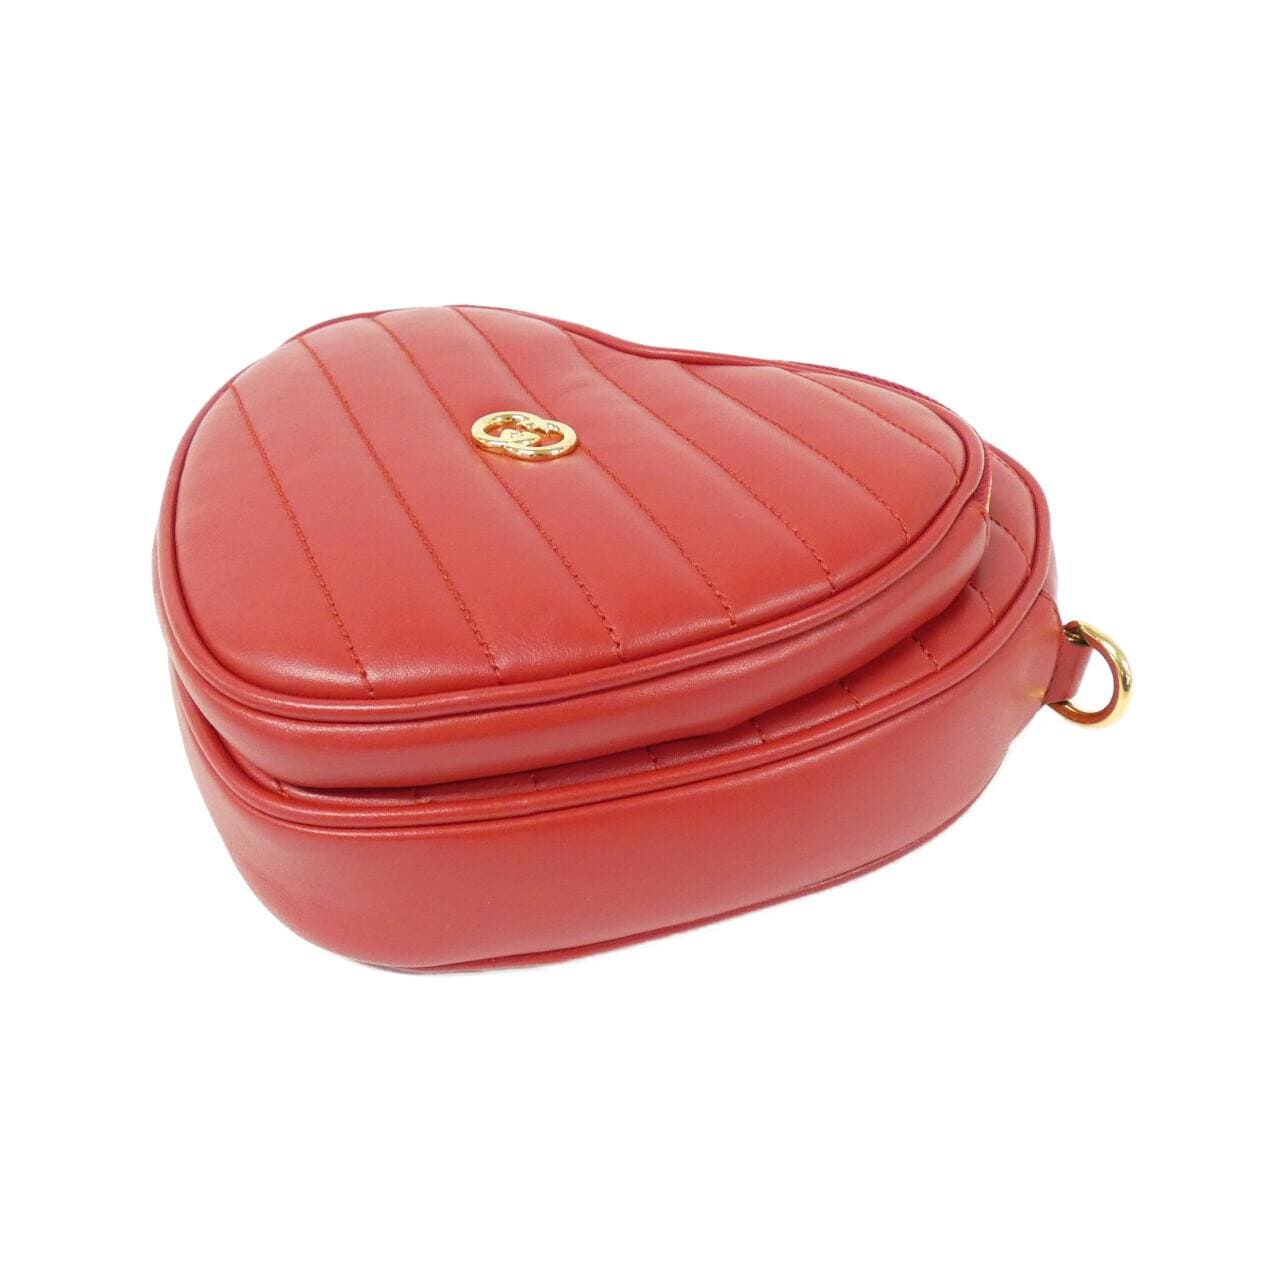 [Unused items] Gucci 751628 AACCL shoulder bag